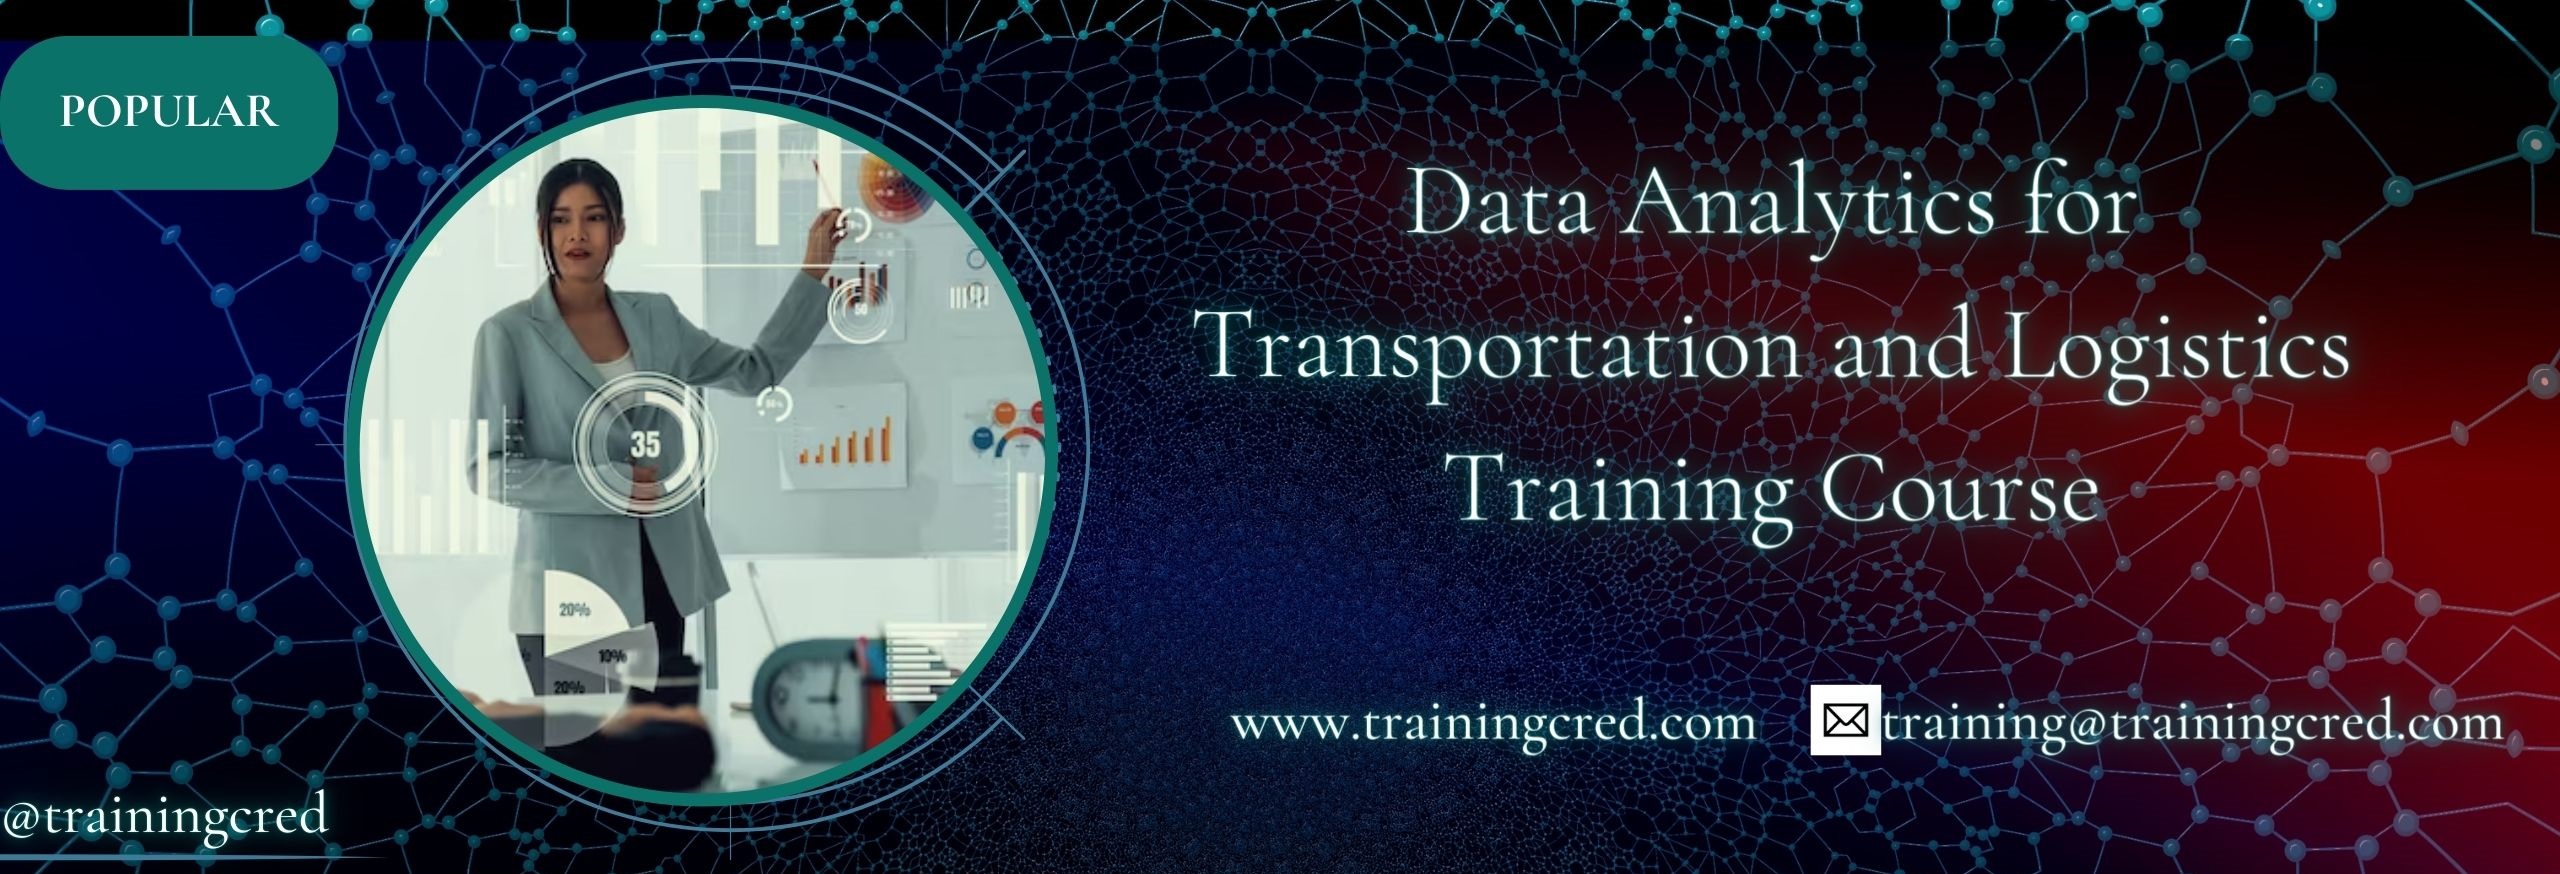 Data Analytics for Transportation and Logistics Training